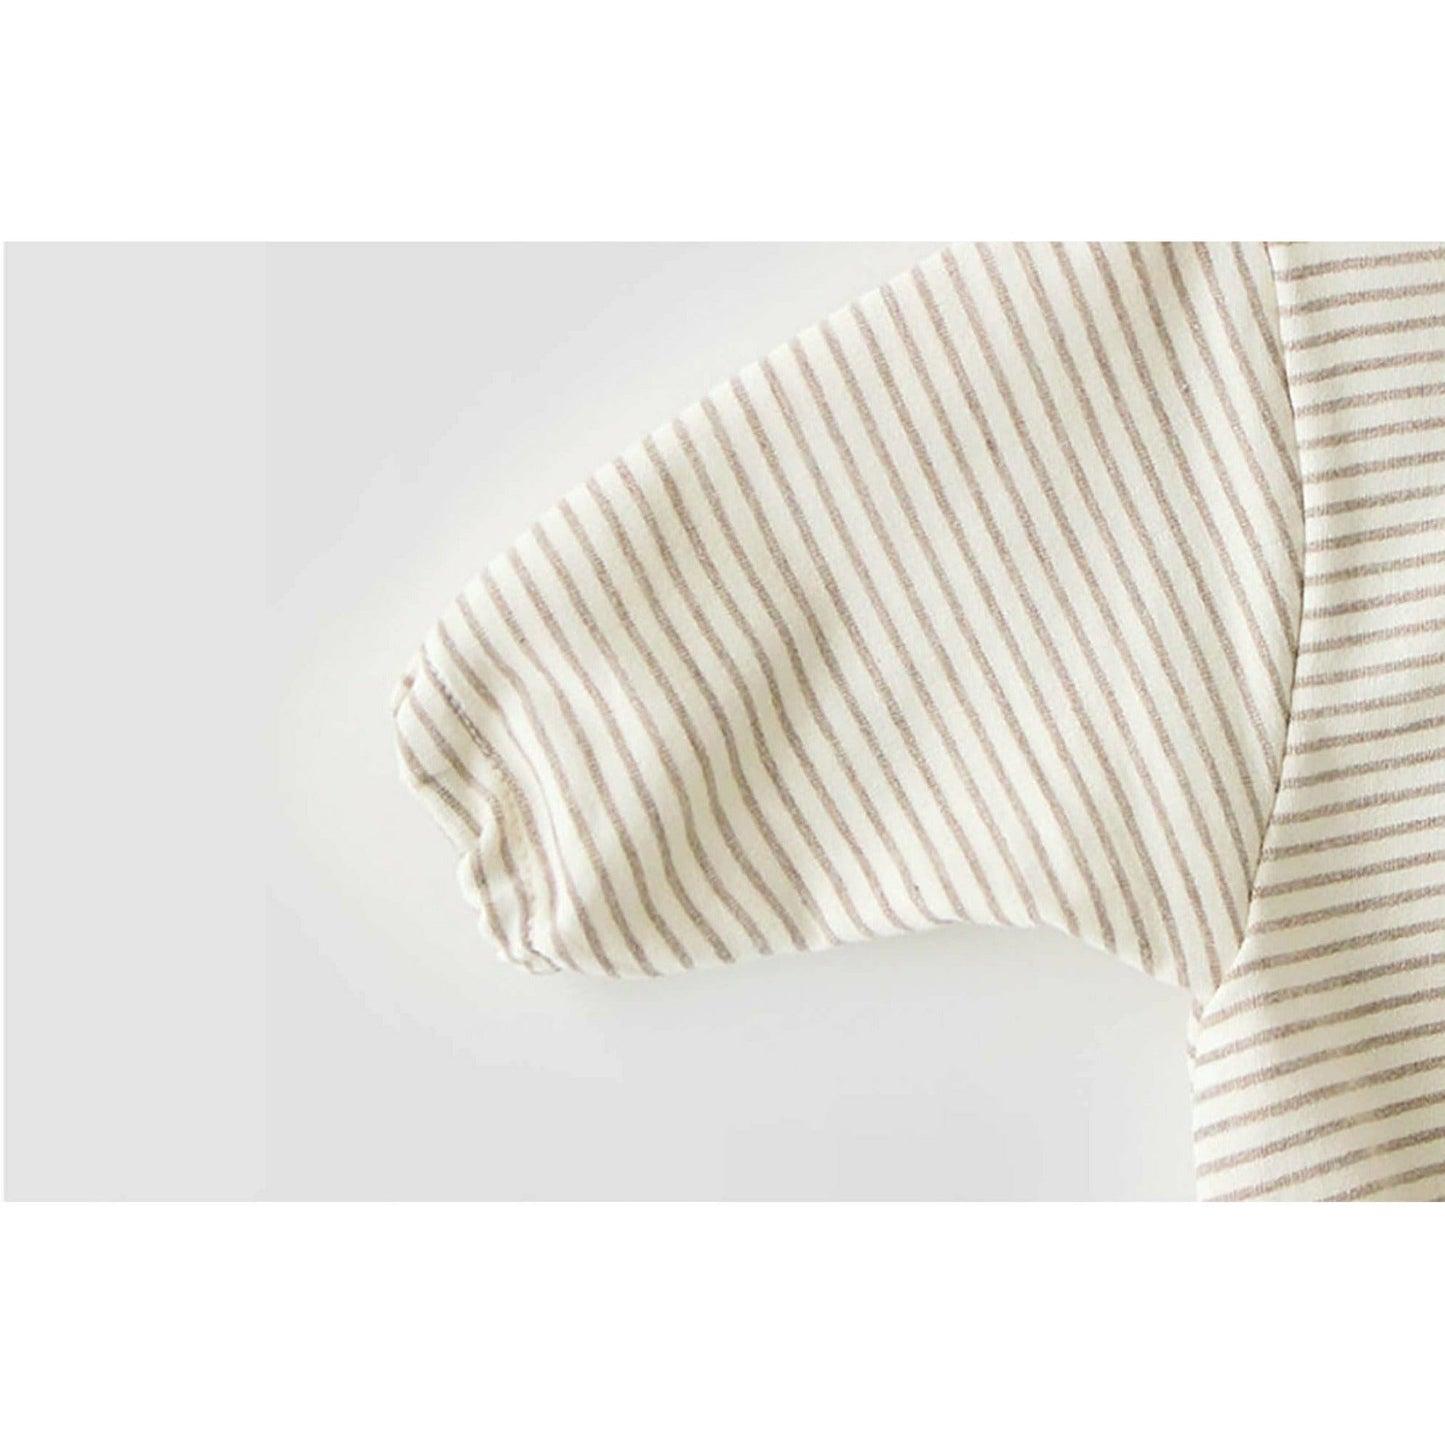 Striped Bubble Sweatshirt Romper- Beige and Black